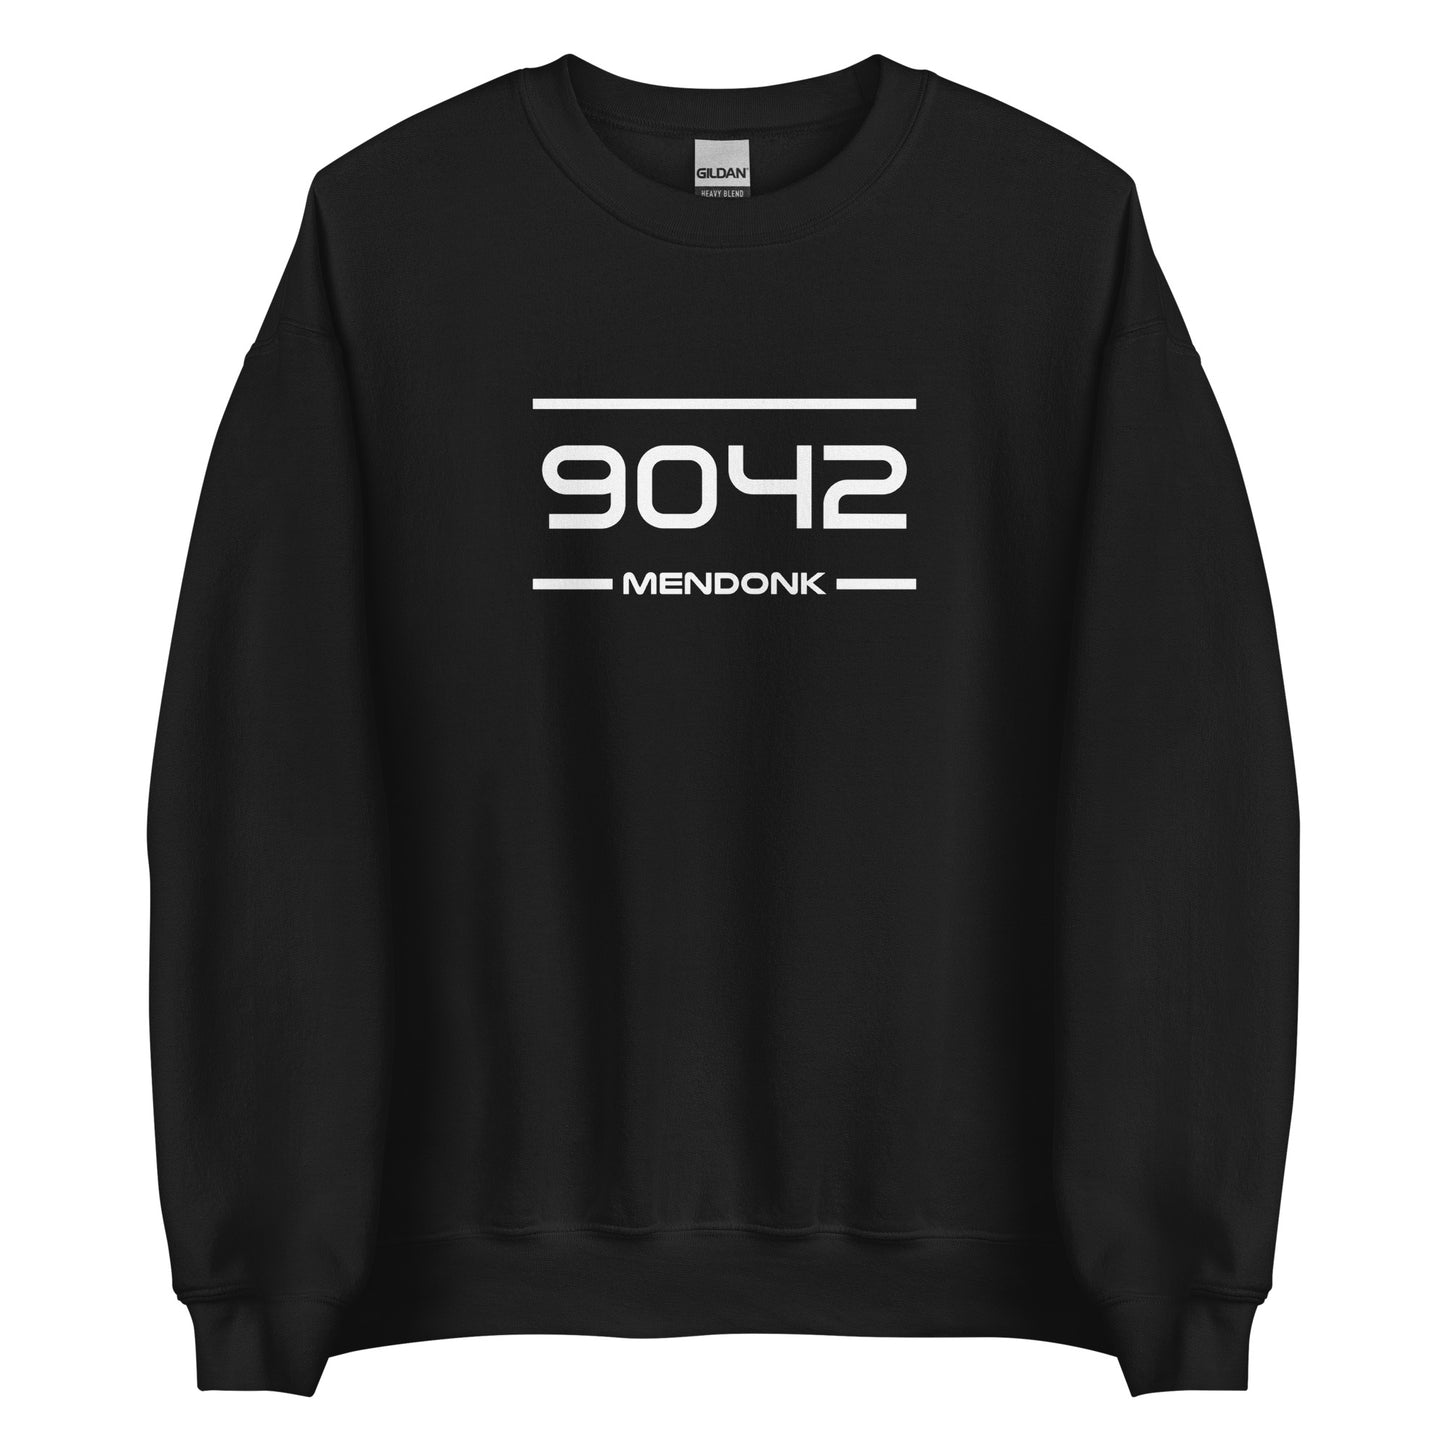 Sweater - 9042 - Mendonk (M/V)